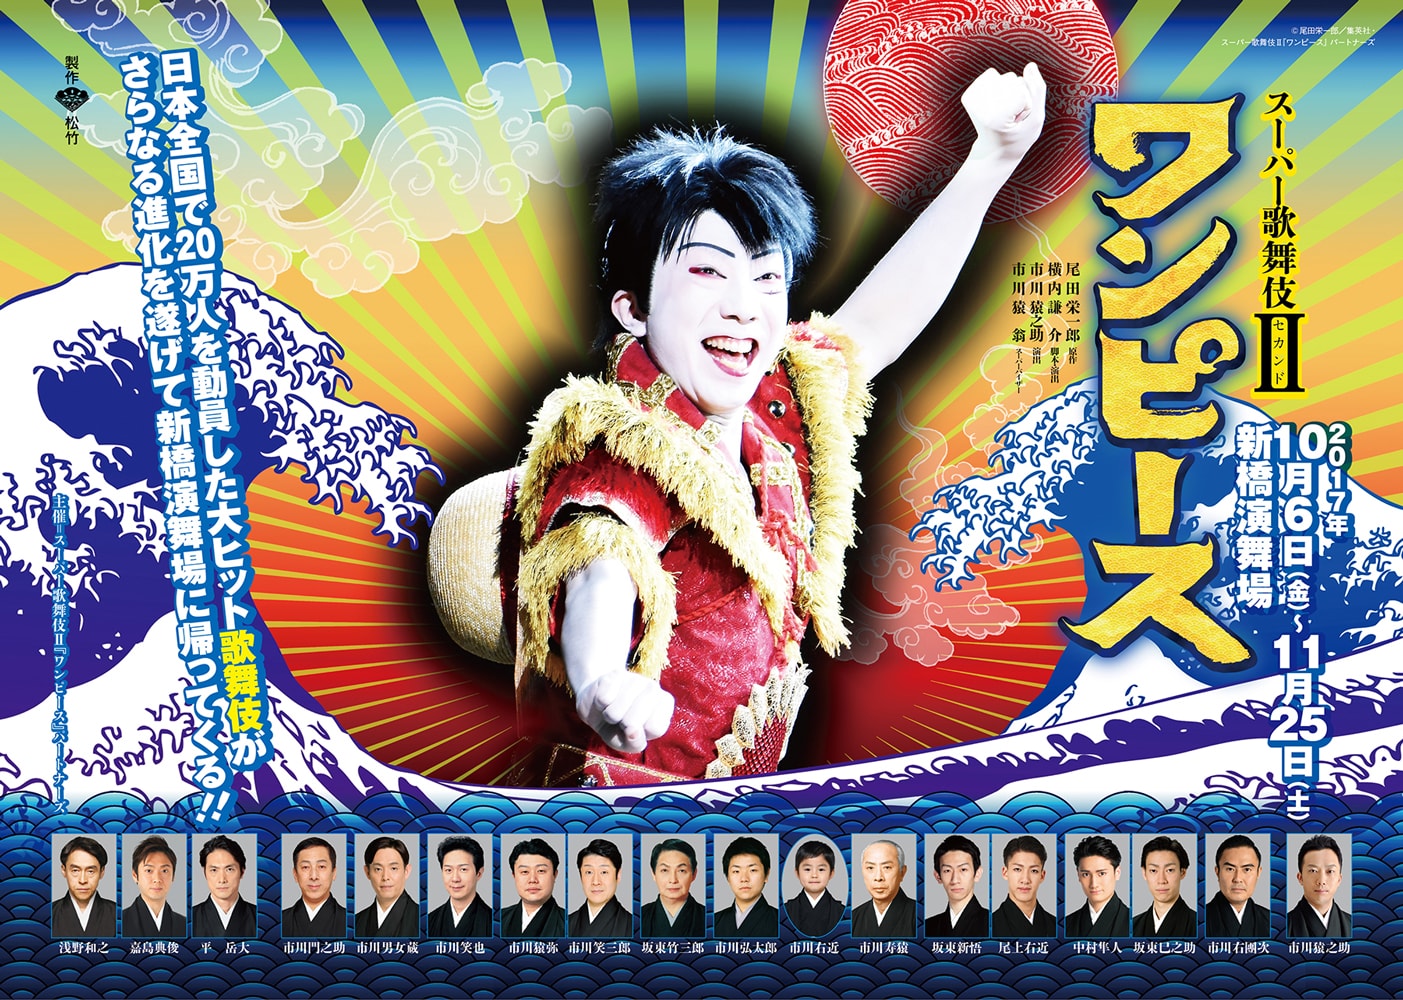 Super Kabuki Ii One Piece At The Shinbashi Enbujo Theatre Theatres Kabuki Web